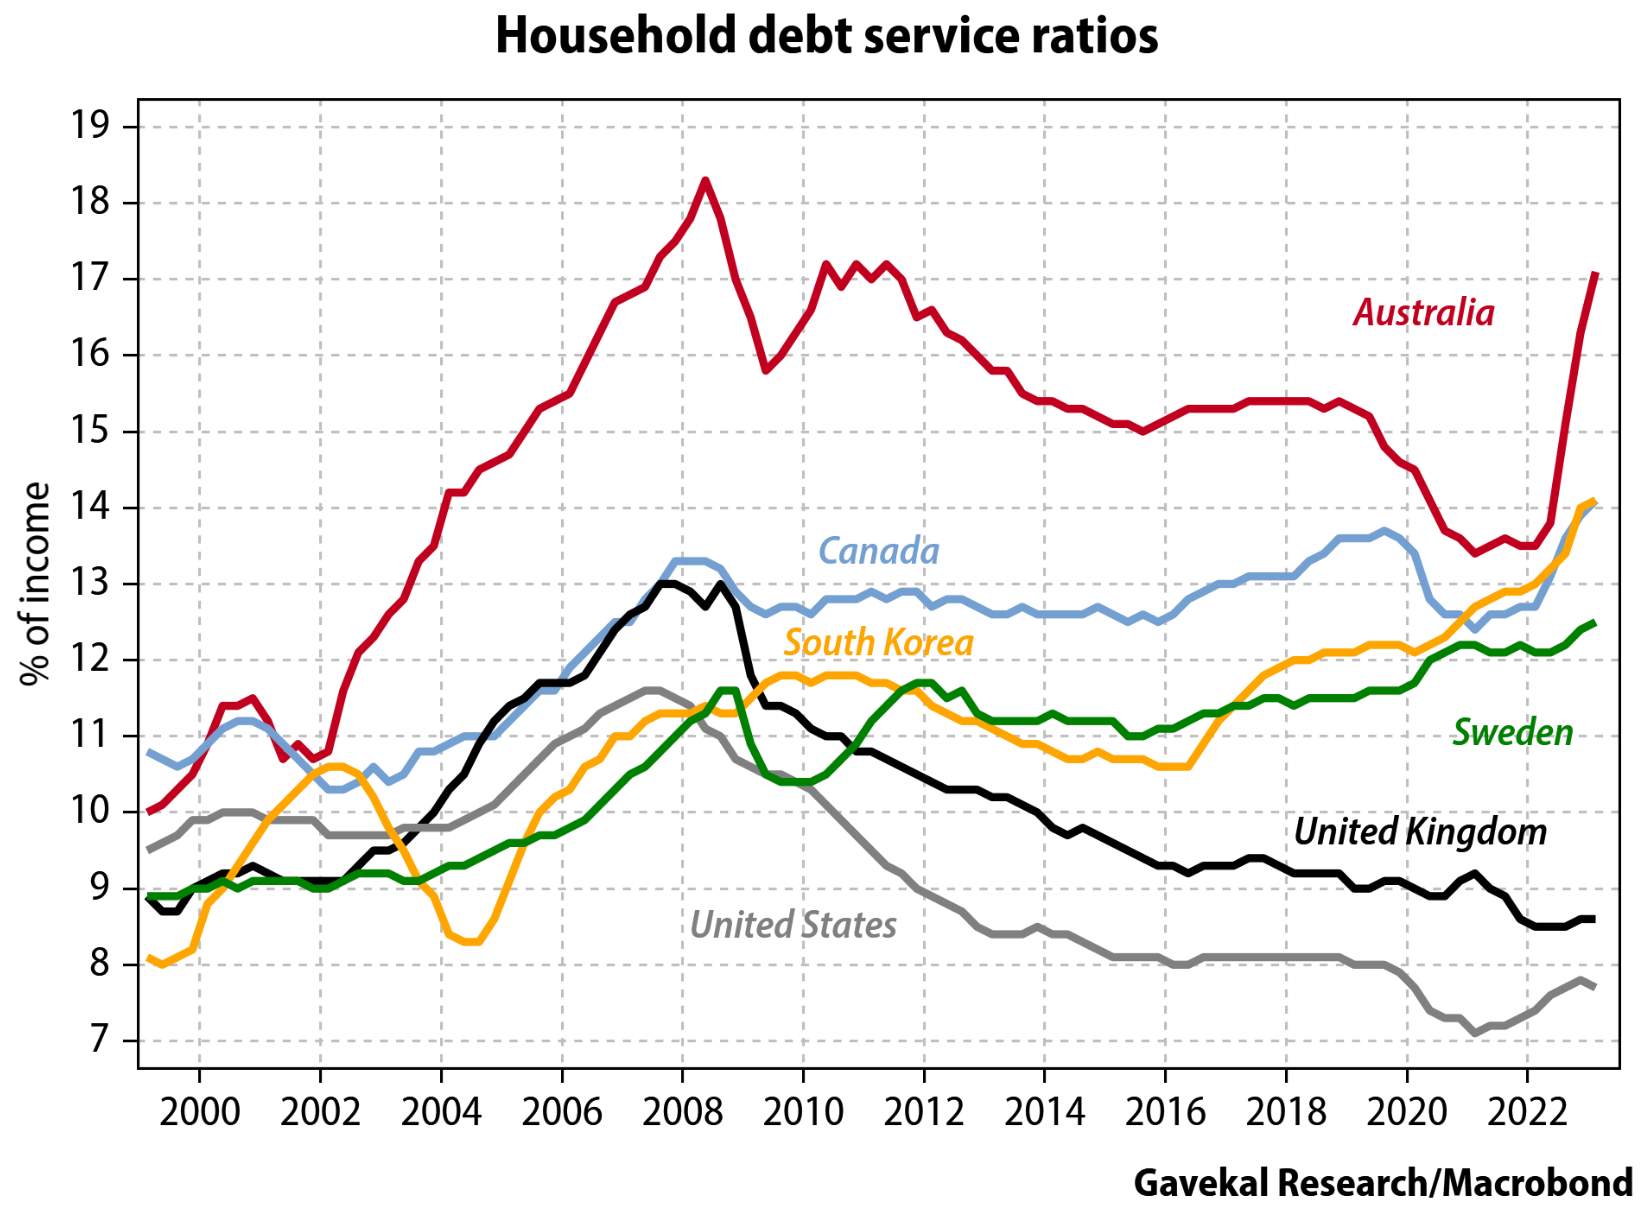 Household debt servicing ratios